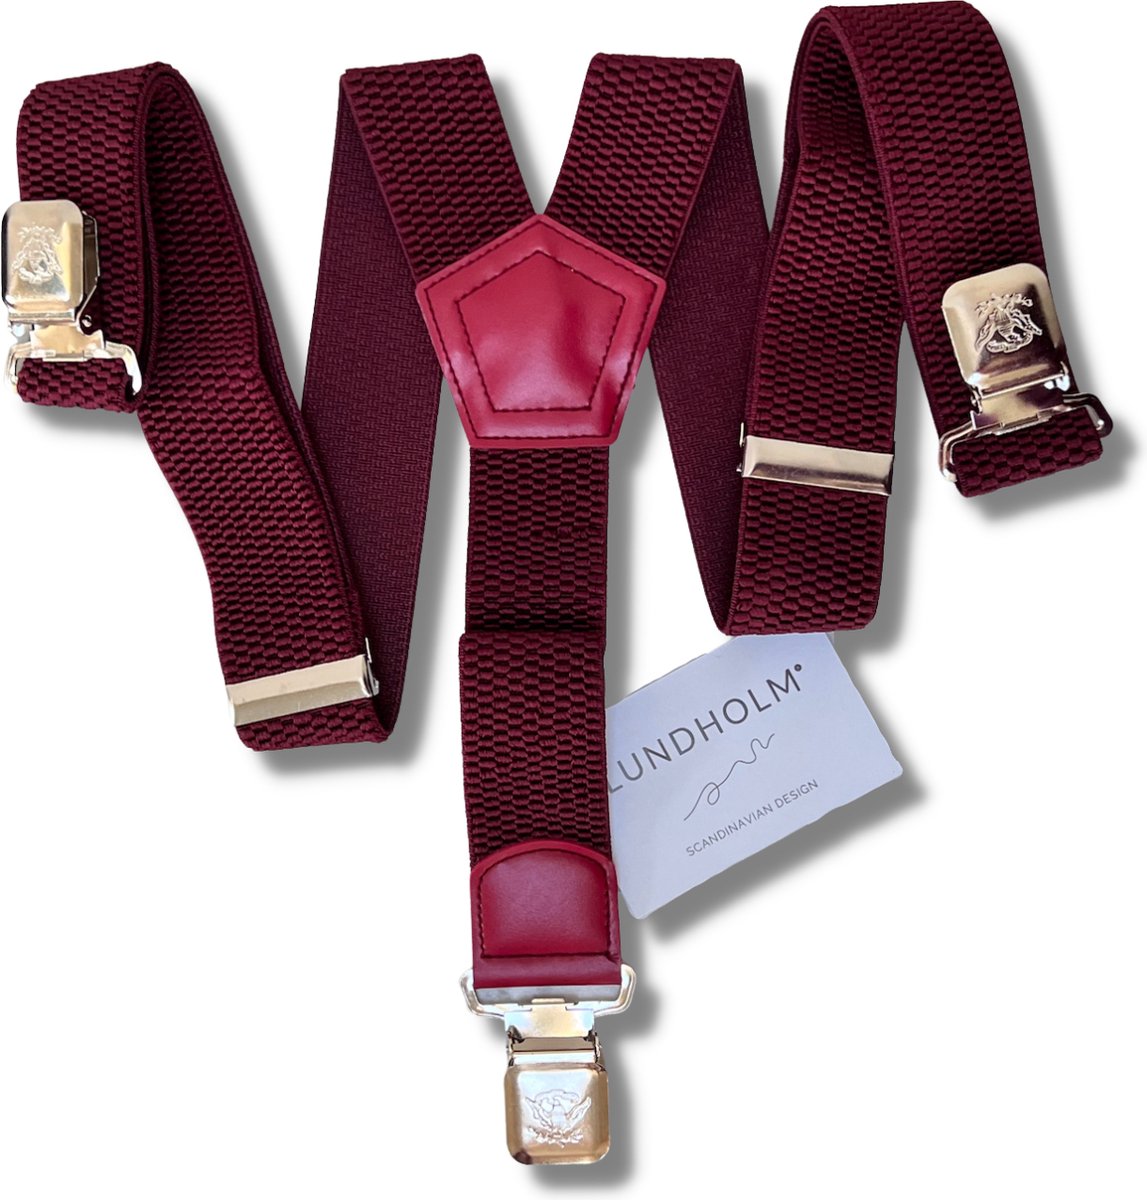 Lundholm Bretels heren volwassenen bordeaux rood 3 clips - extra stevig hoge kwaliteit - Scandinavisch design - mannen cadeautjes tip | Lundholm Bastad serie